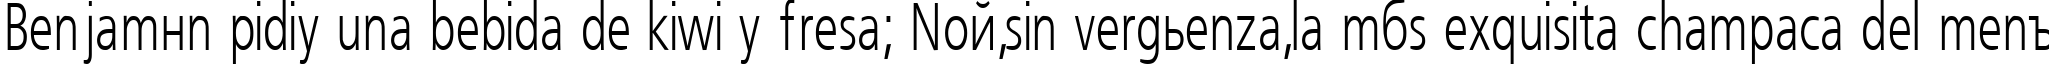 Пример написания шрифтом FreeSet70H текста на испанском